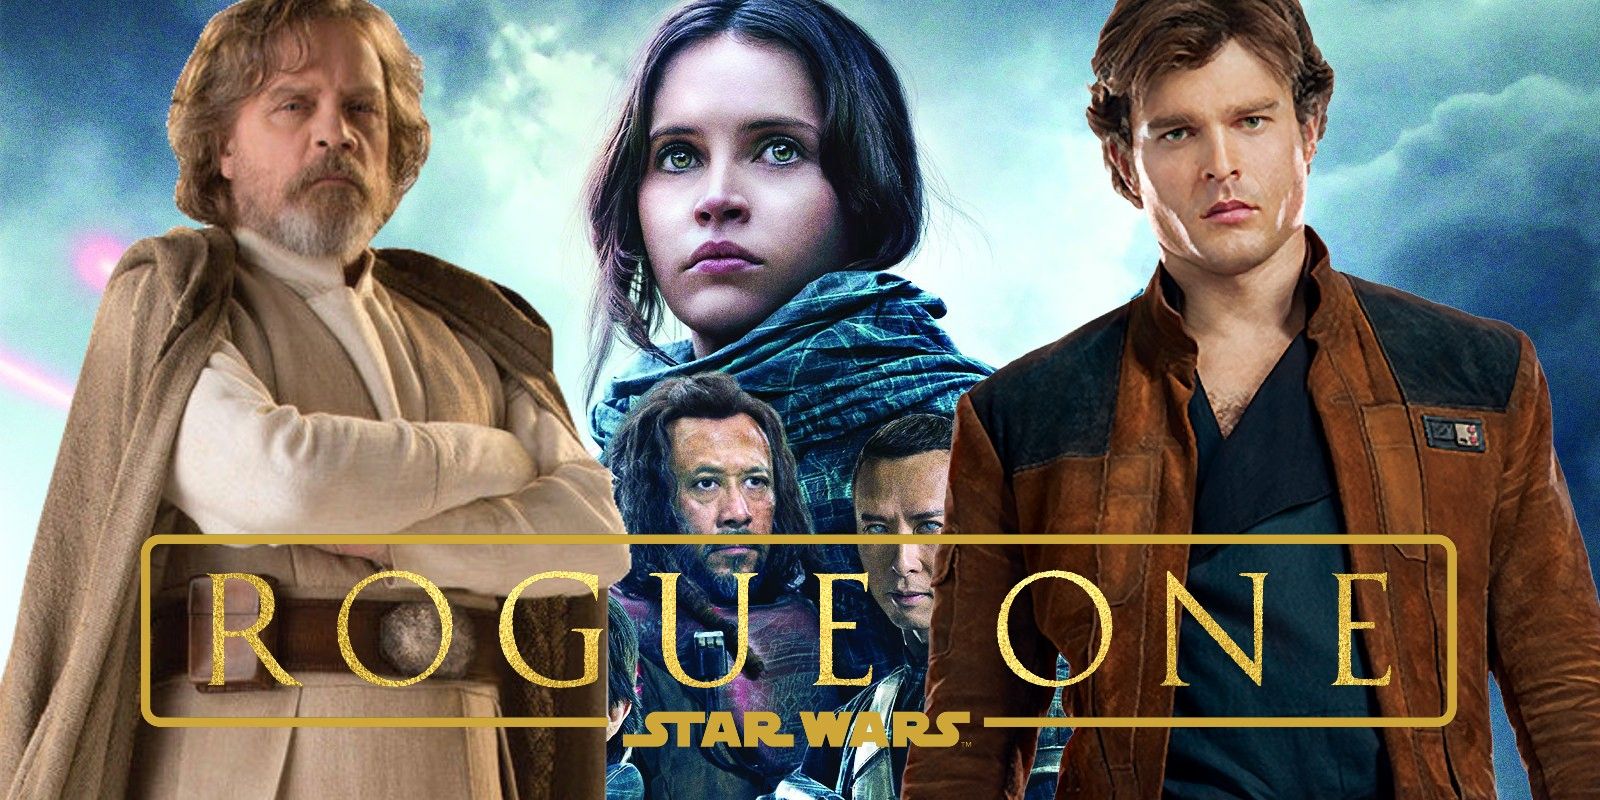 https://static1.srcdn.com/wordpress/wp-content/uploads/2020/04/Rogue-One-header-Mark-Hamill-as-Luke-Skywalker-and-Alden-Ehrenreich-as-Han-Solo.jpg